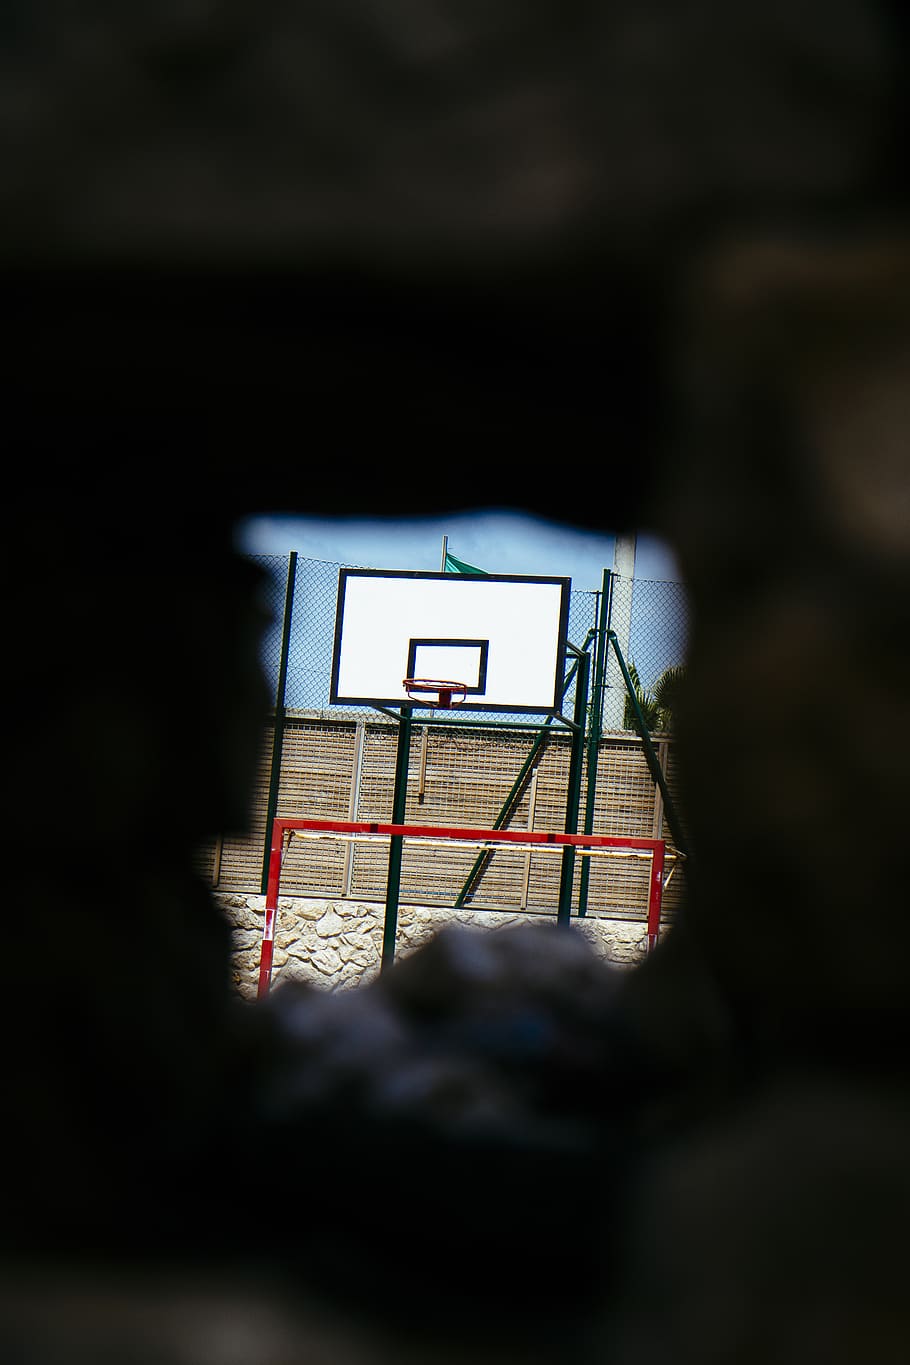 white and black basketball system, hole, window, sant antoni de portmany